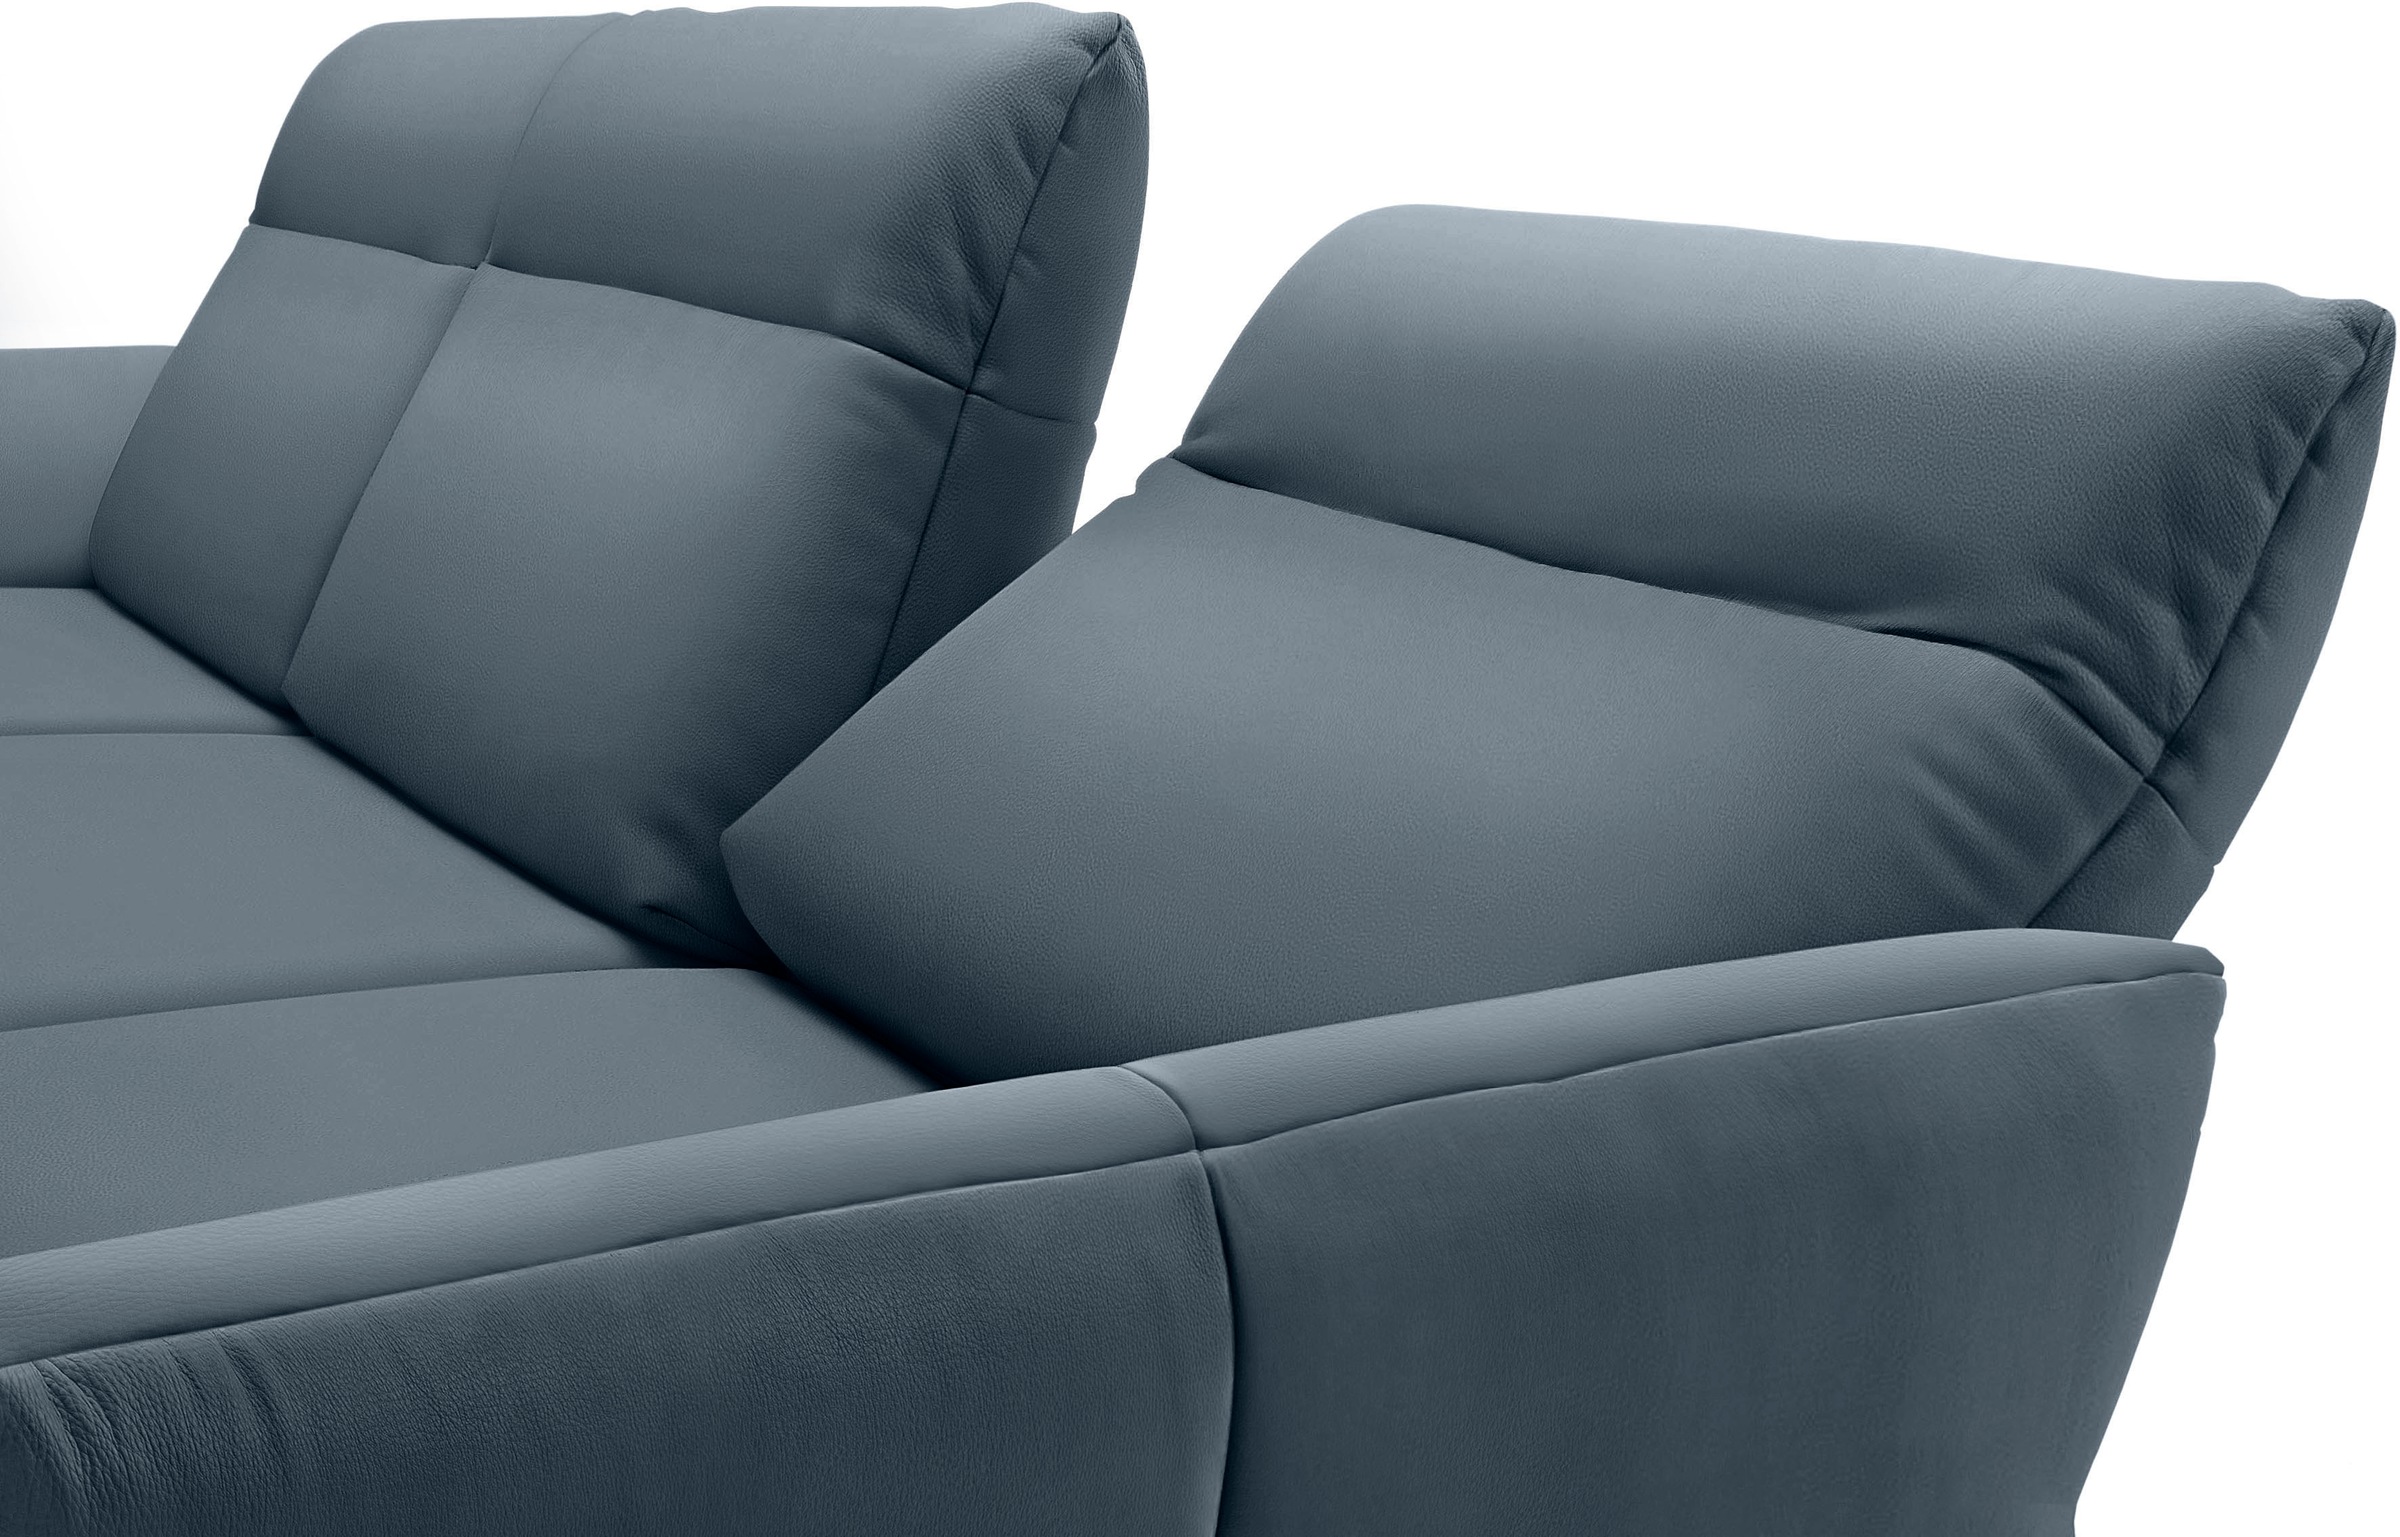 hülsta sofa Ecksofa »hs.460«, Sockel in Eiche, Alugussfüße in umbragrau, Breite 298 cm